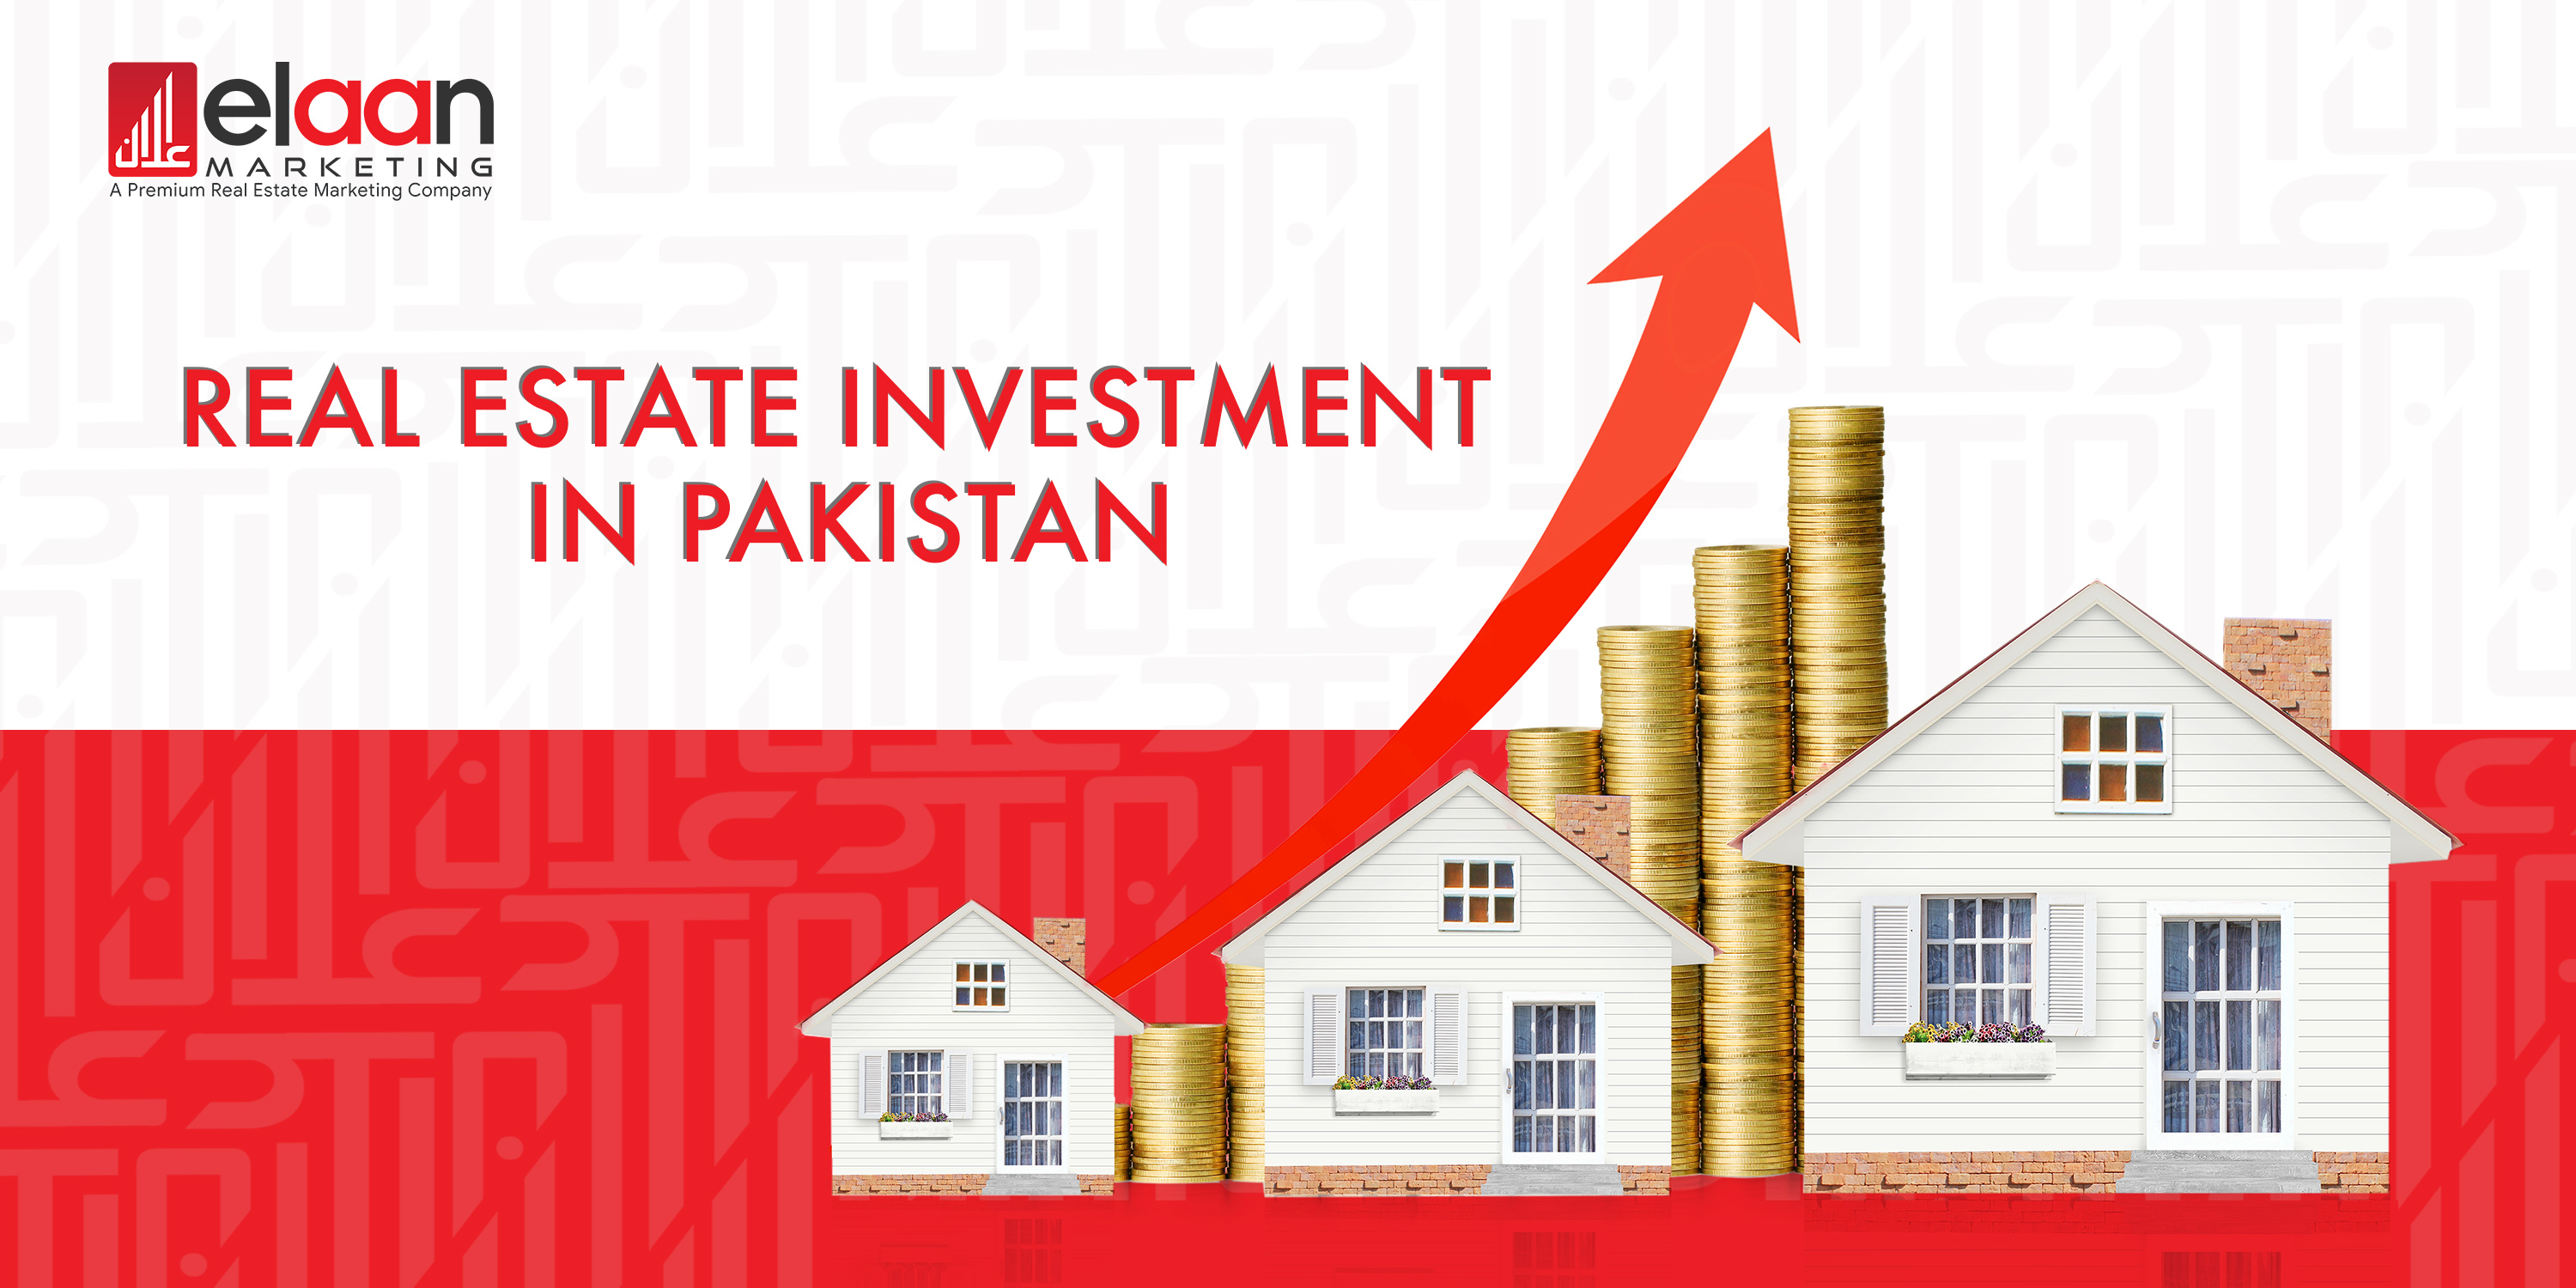 Real estate investment in Pakistan | Elaan Marketing Blog